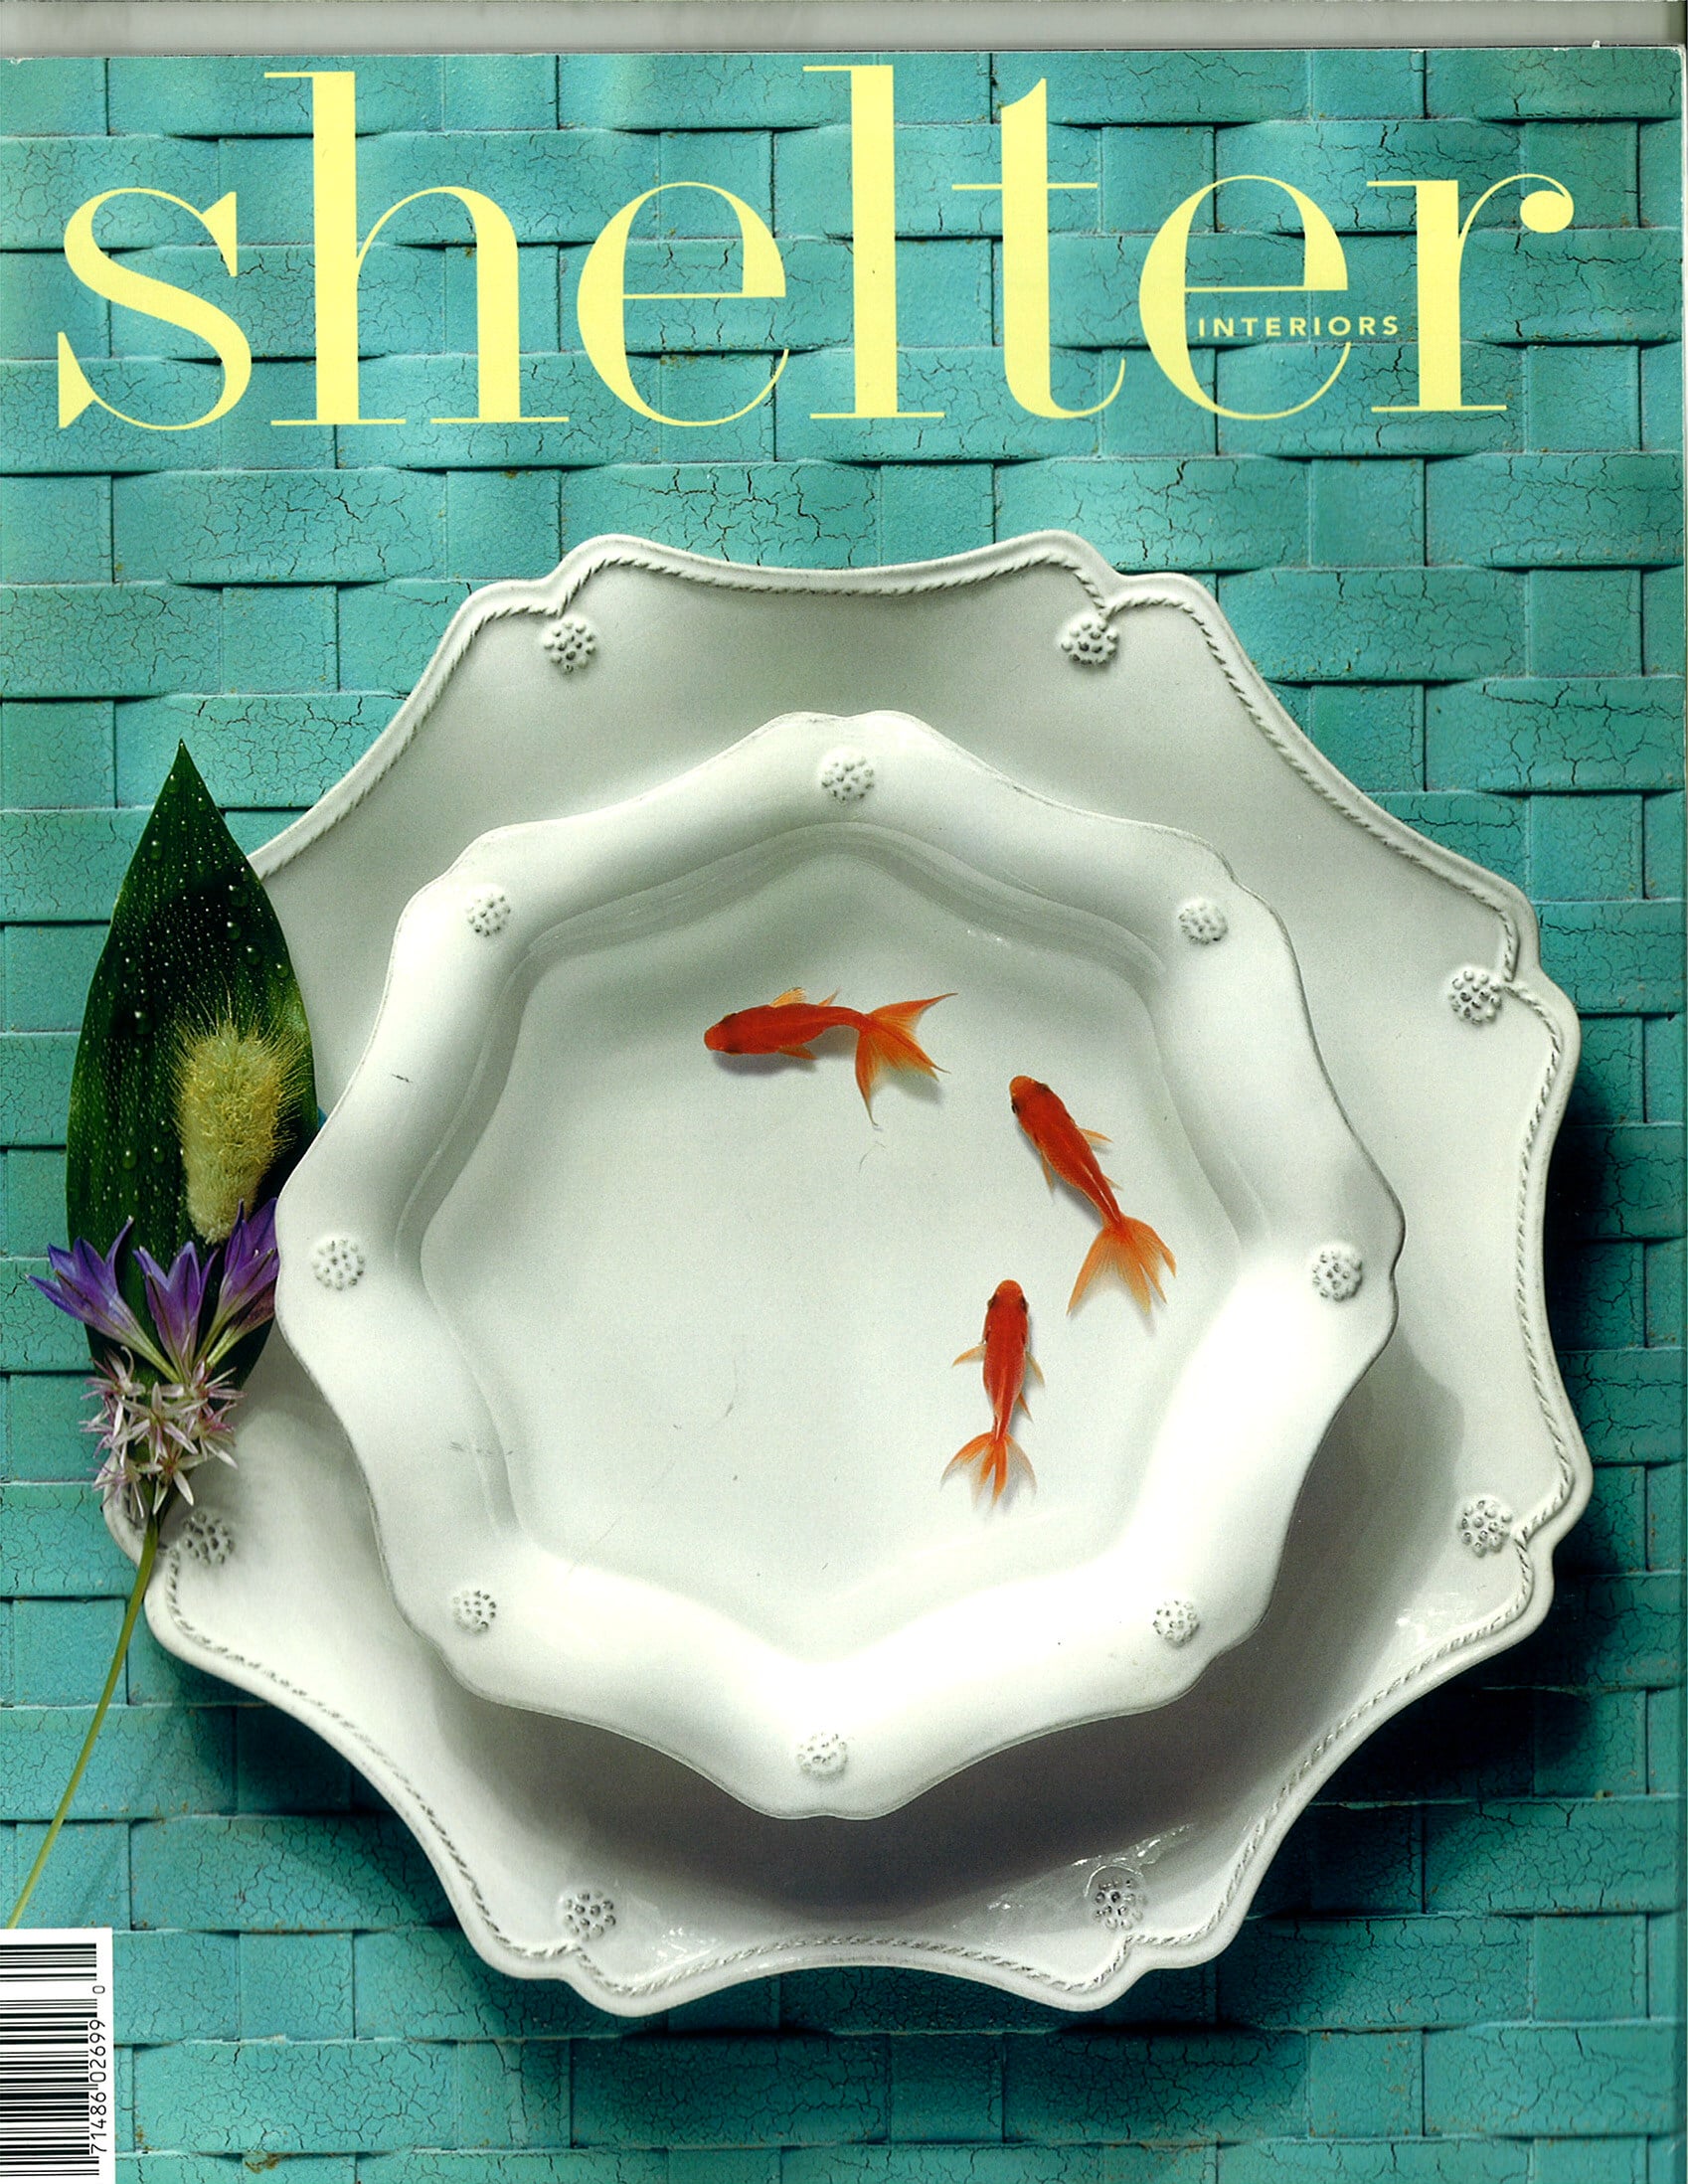 Shelter Interiors magazine 